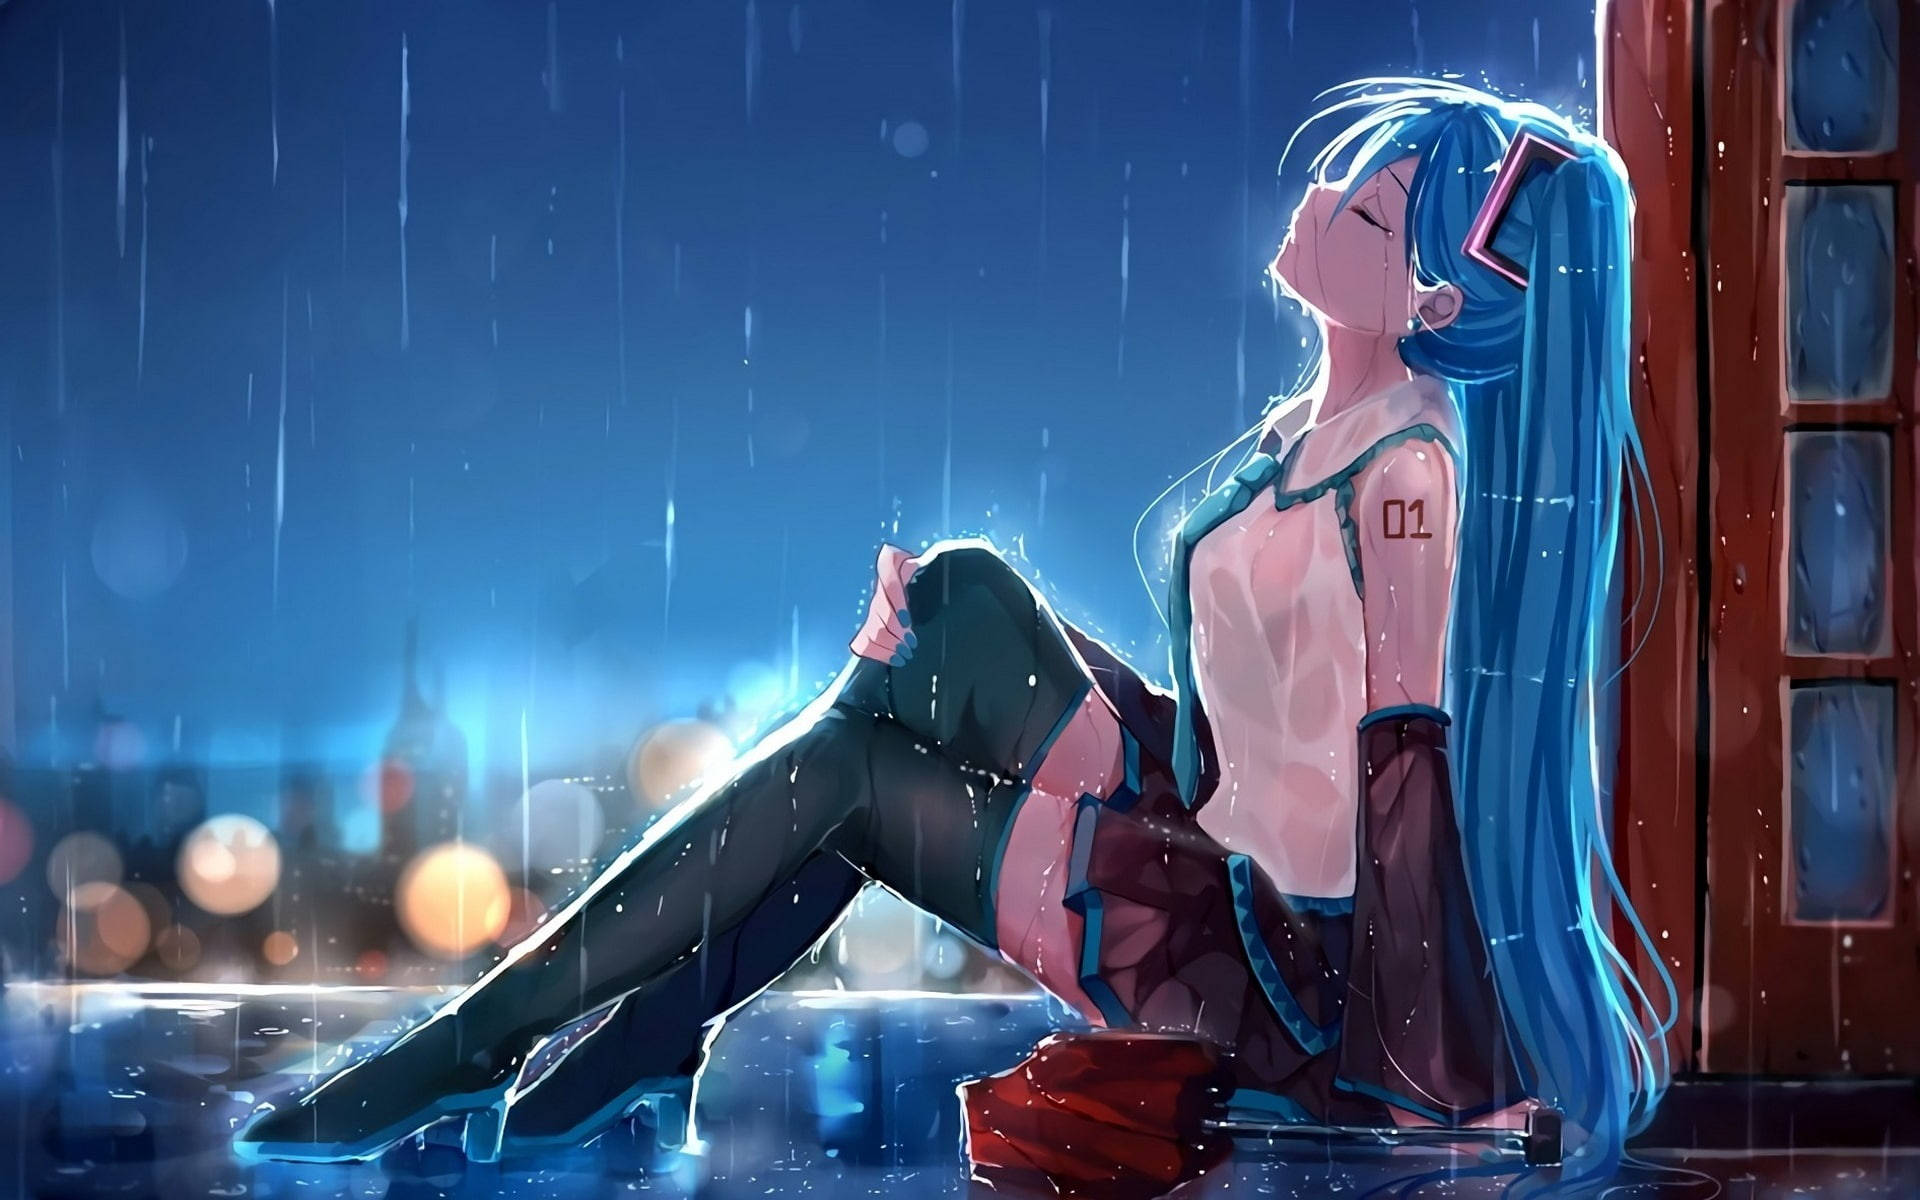 Anime Girl Showering In The Most Beautiful Rain